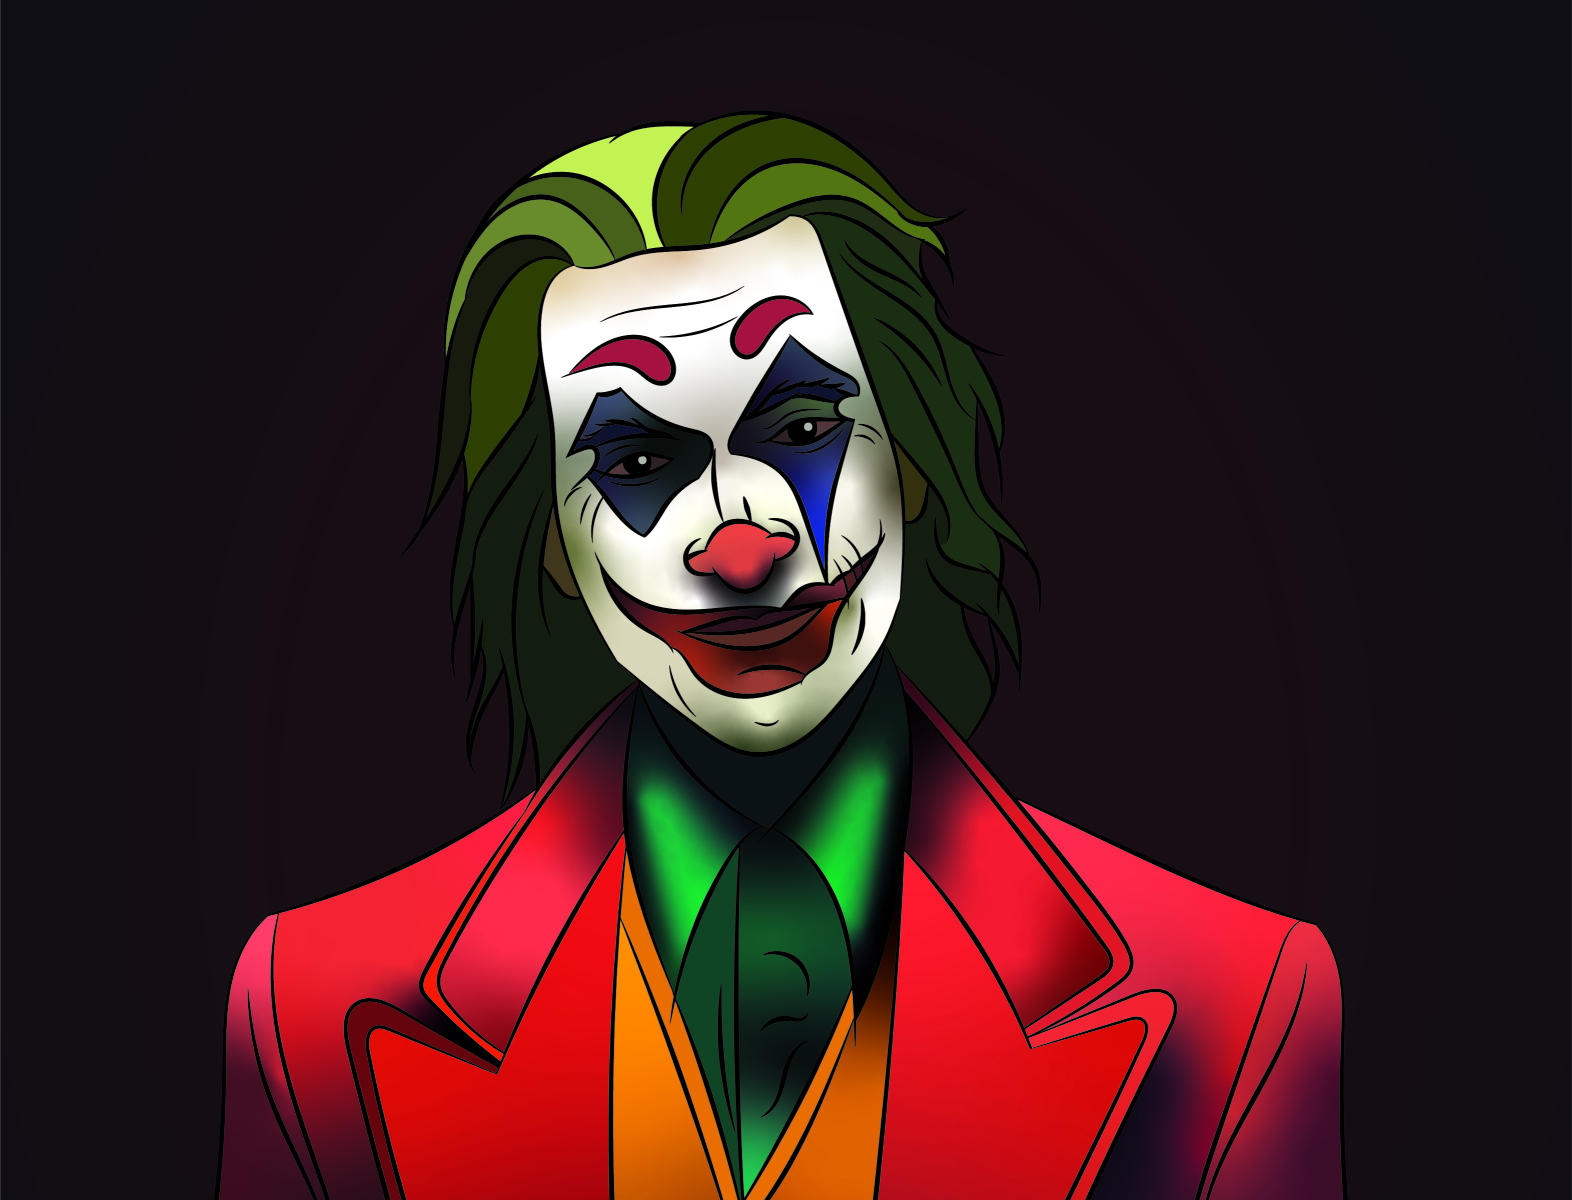 The Joker by Stiliana Ivanova on Dribbble